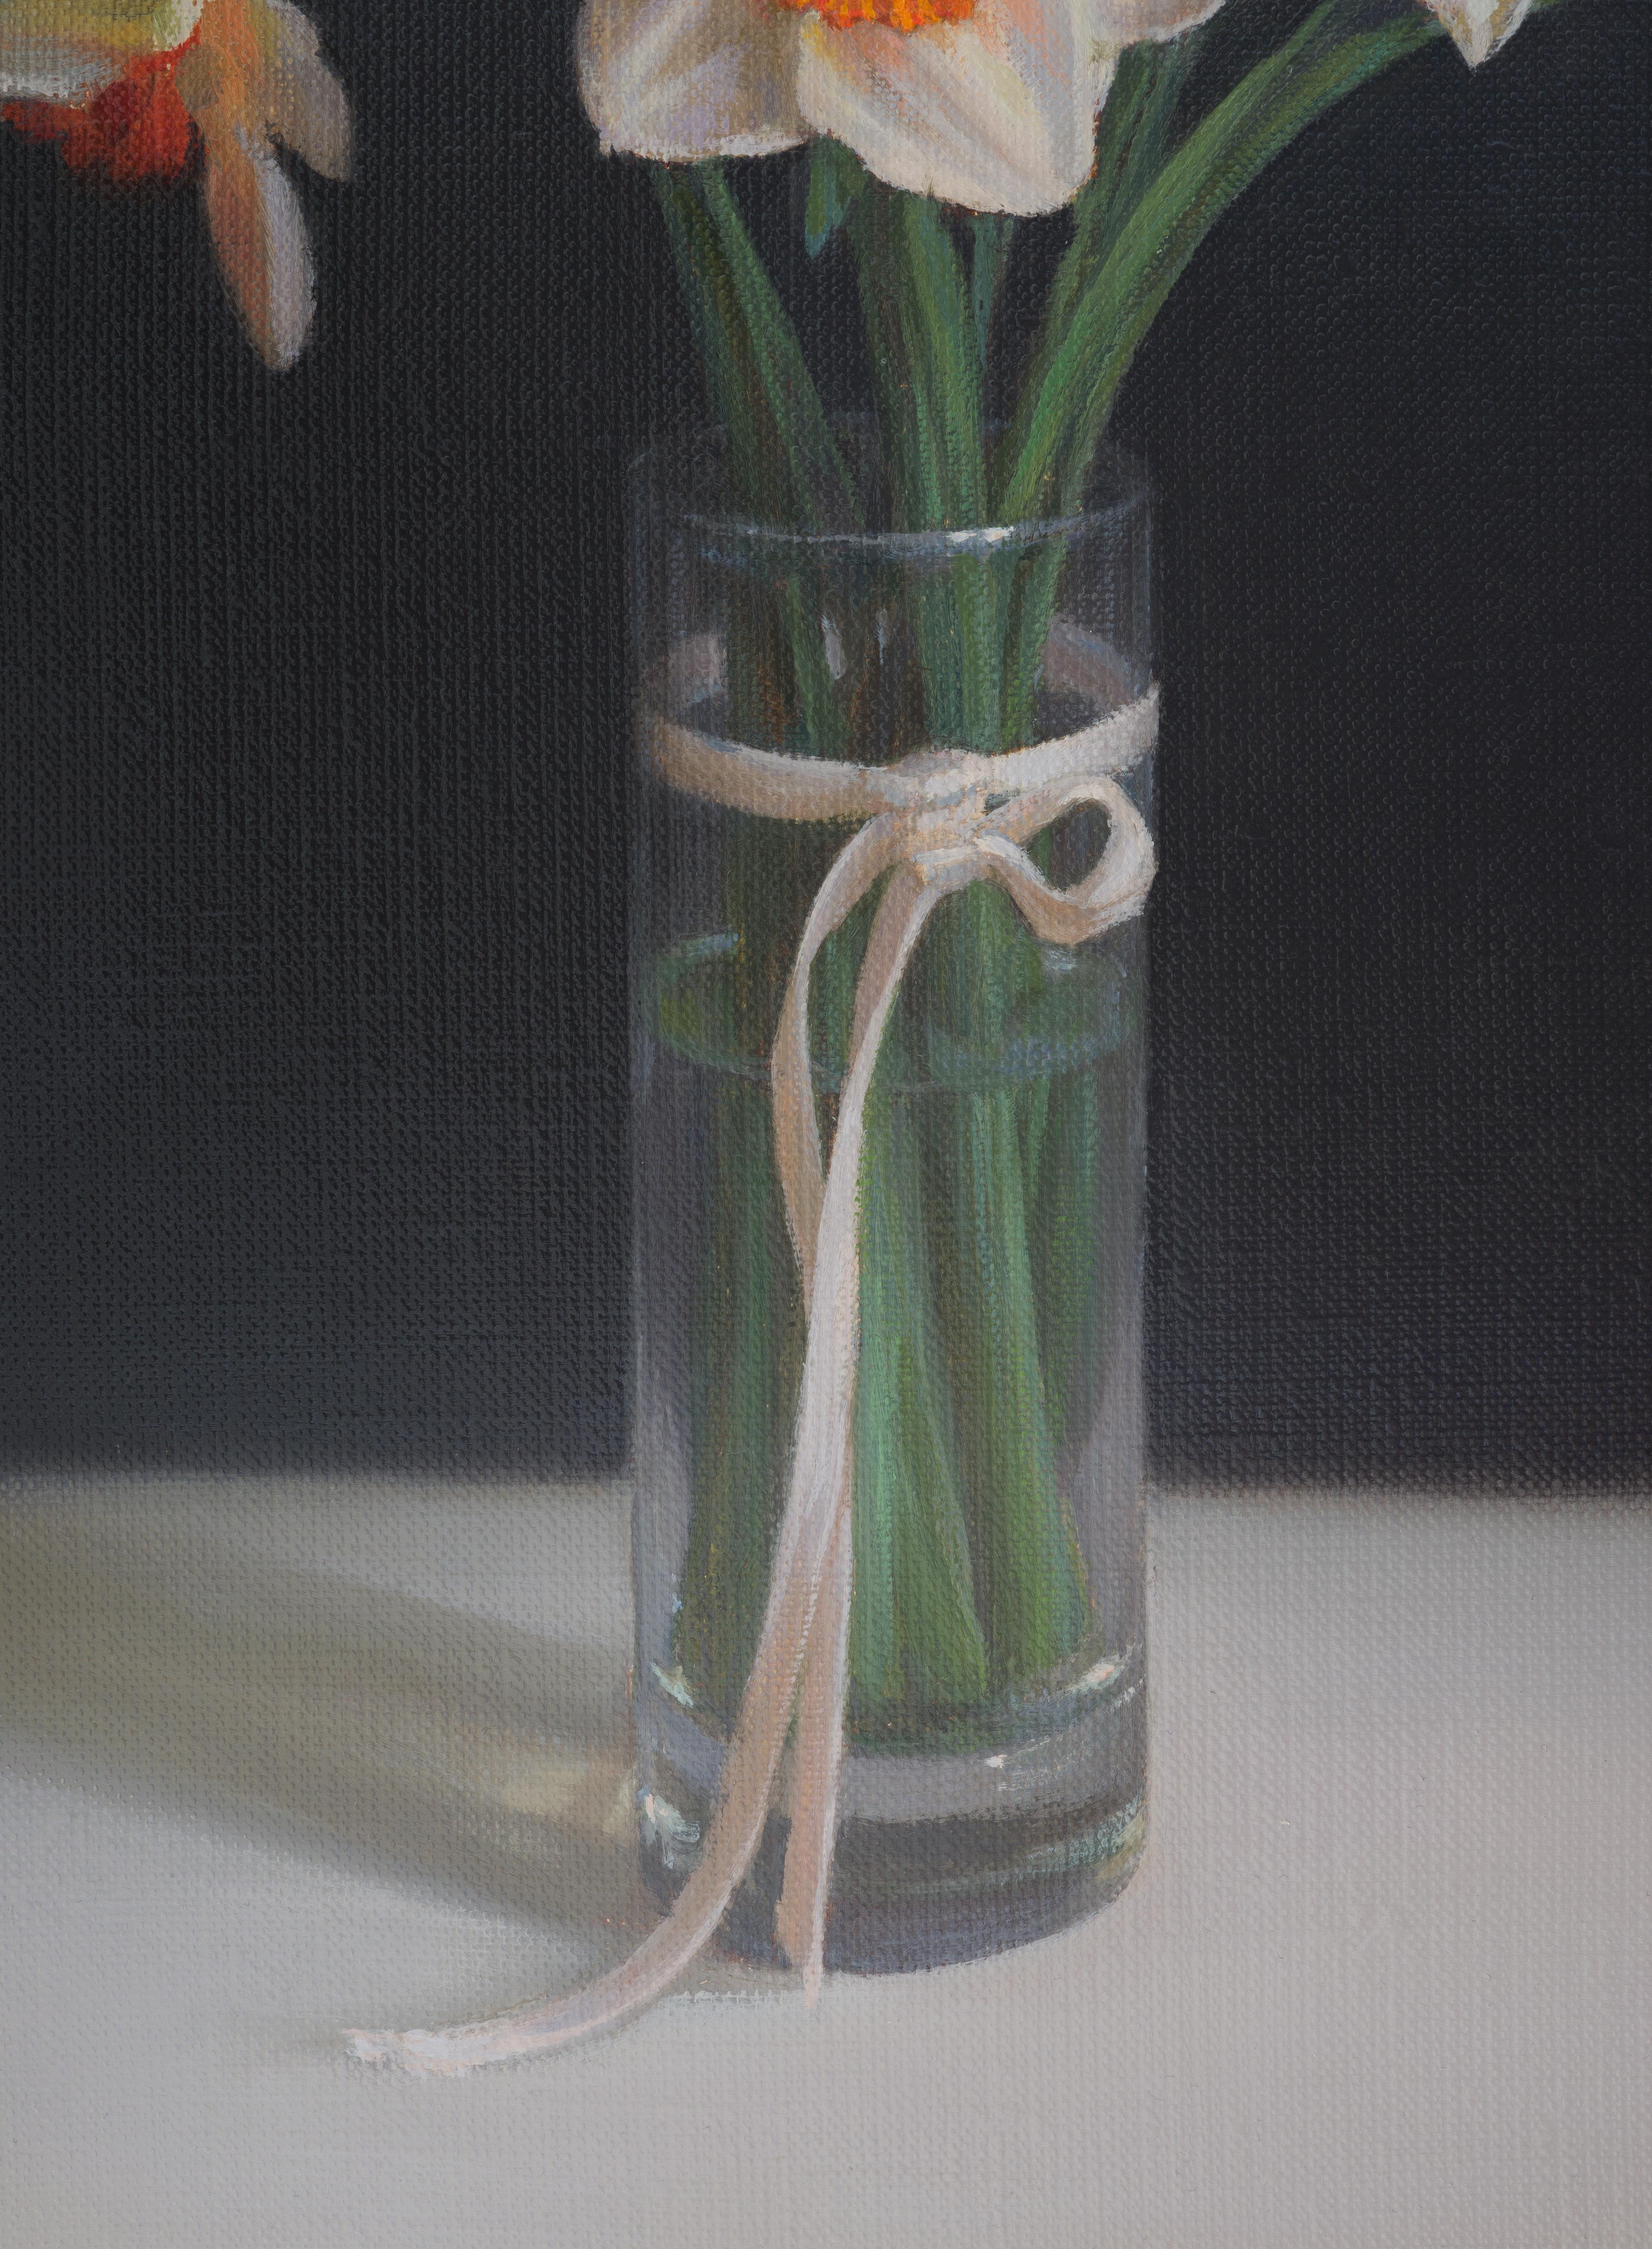 Gift, Realist Modern Still life oil painting with daffodils by Irina Trushkova 2